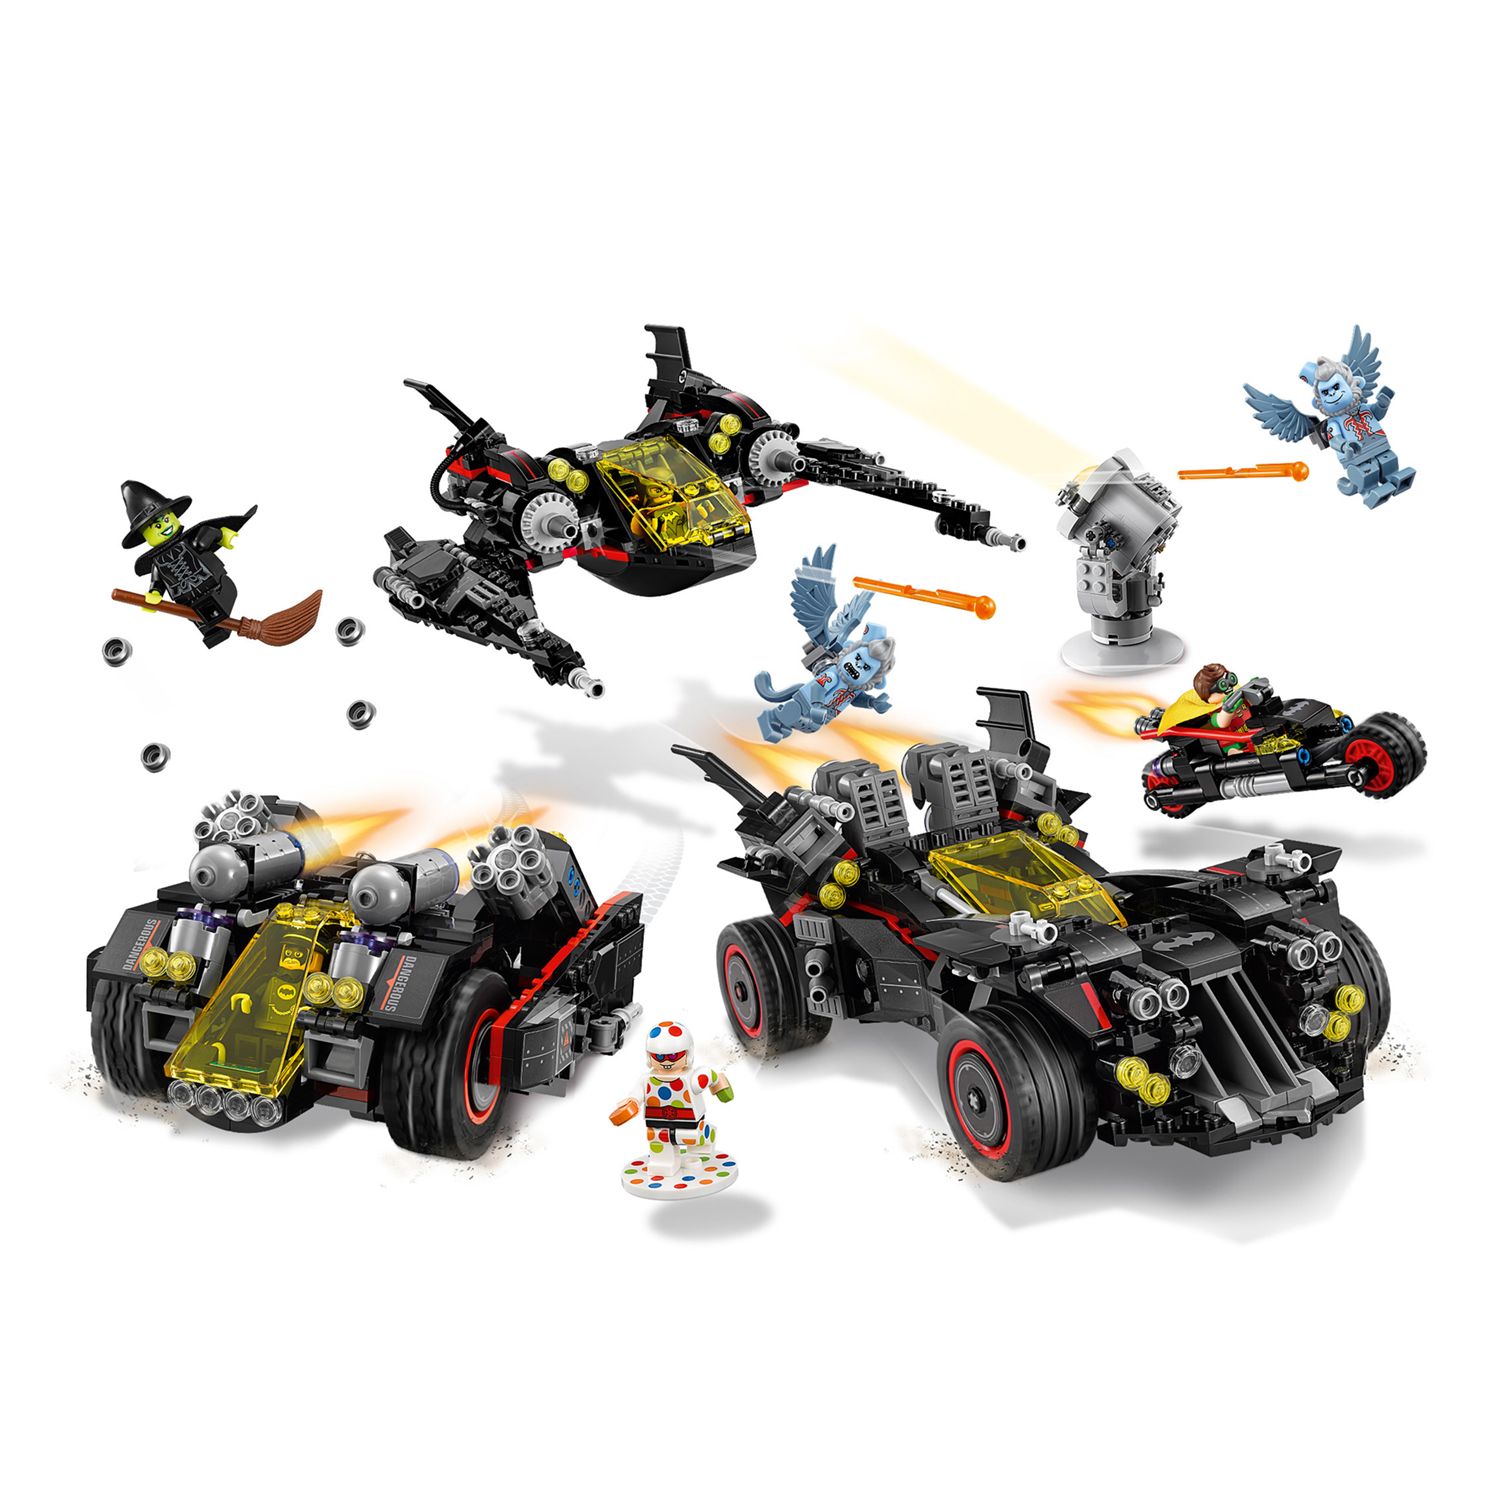 LEGO The LEGO Batman Movie 70917 Ultimate Batmobile